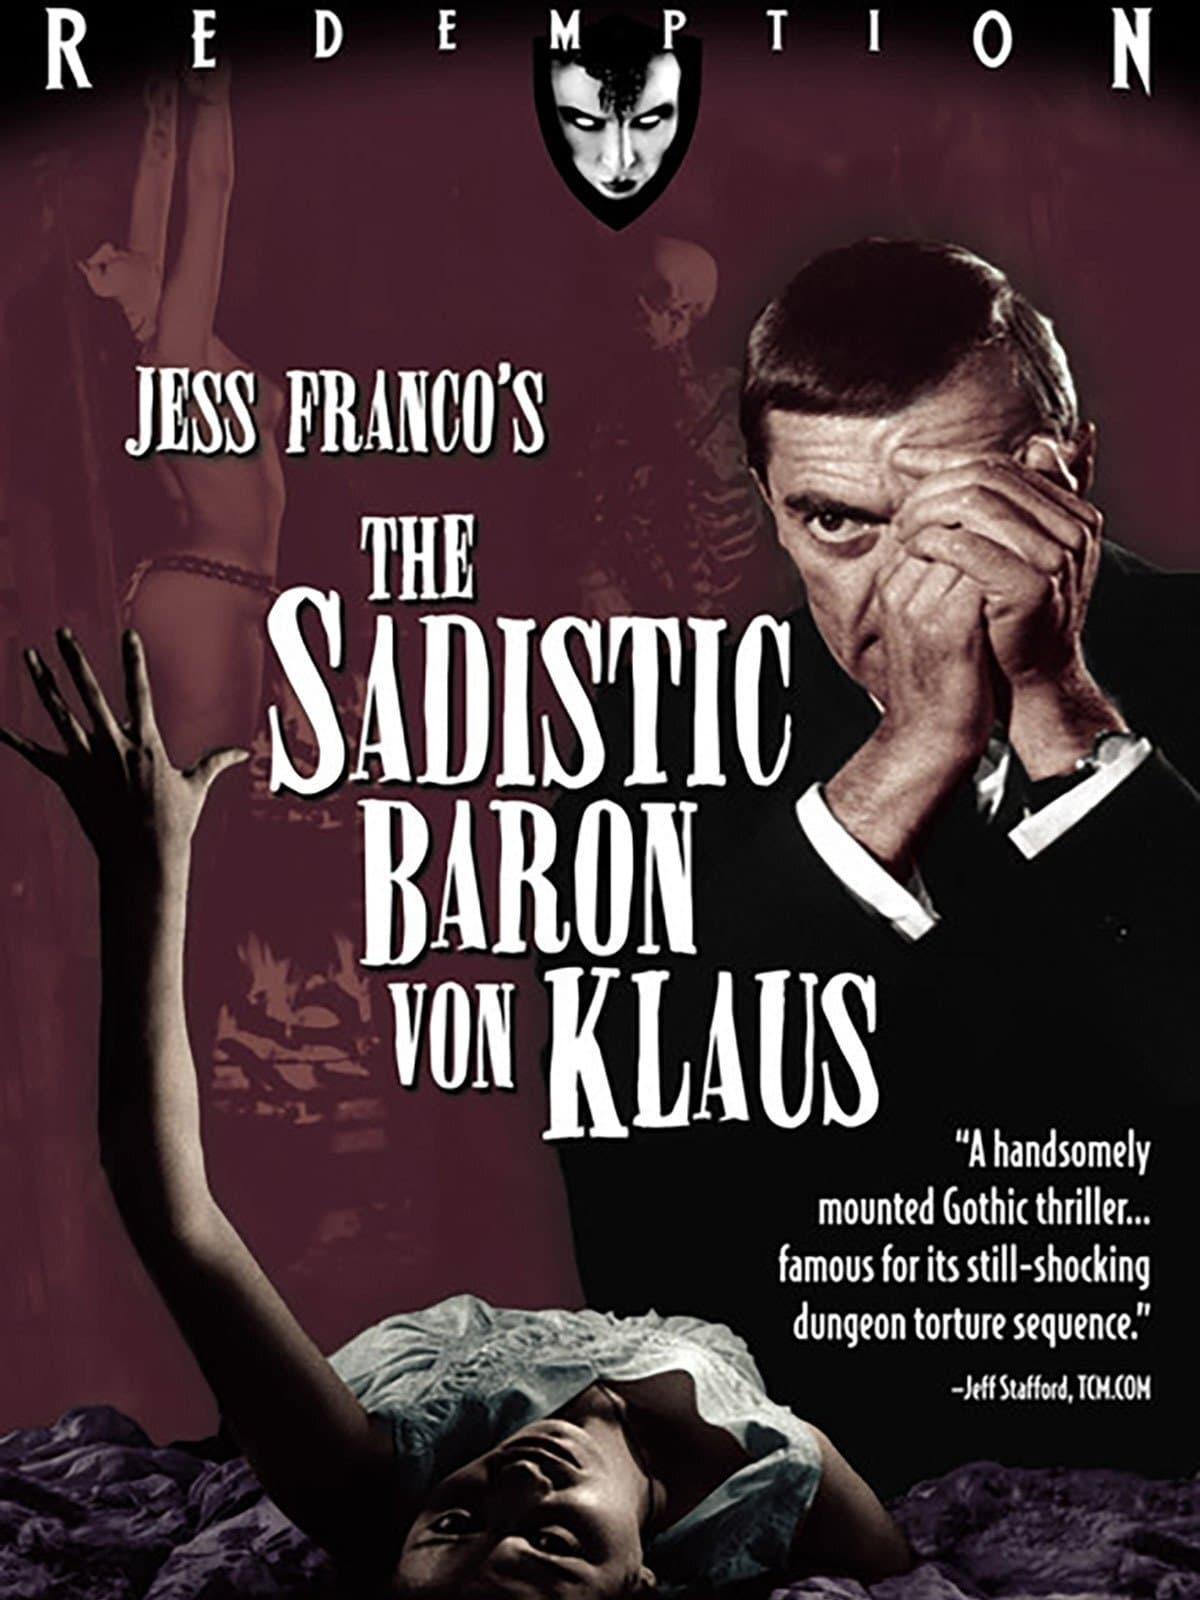 The Sadistic Baron Von Klaus poster